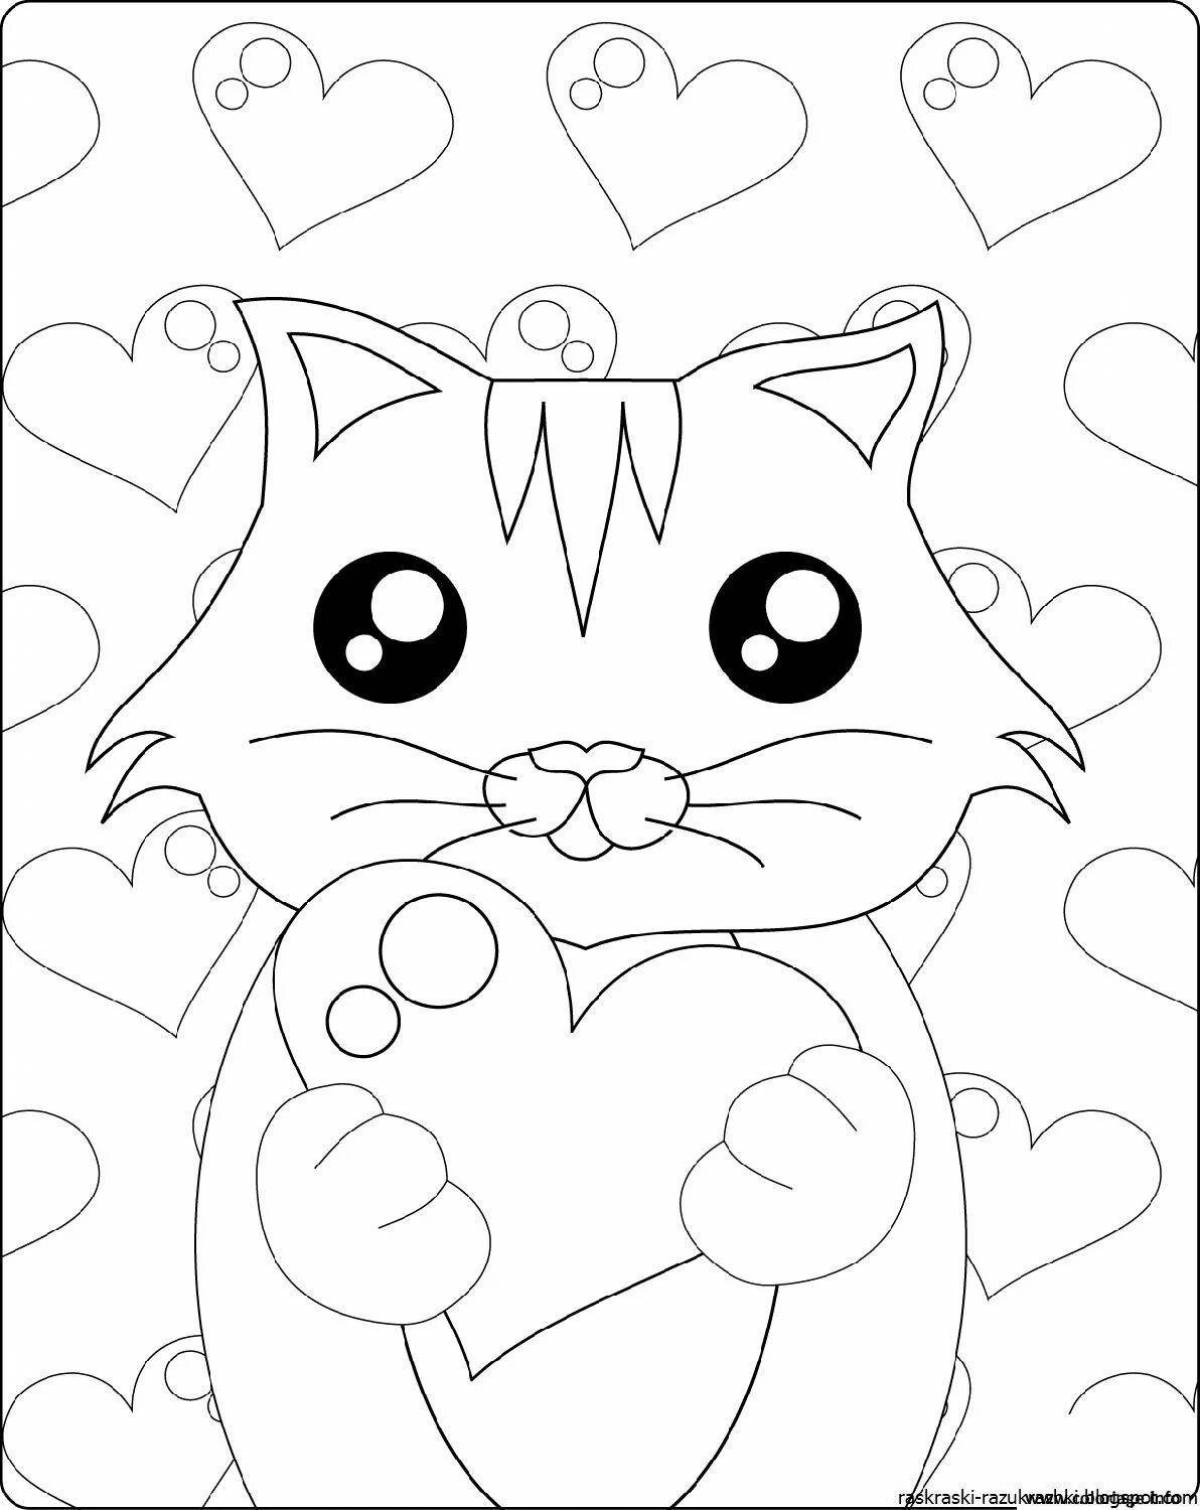 Cute cat fun coloring book for kids